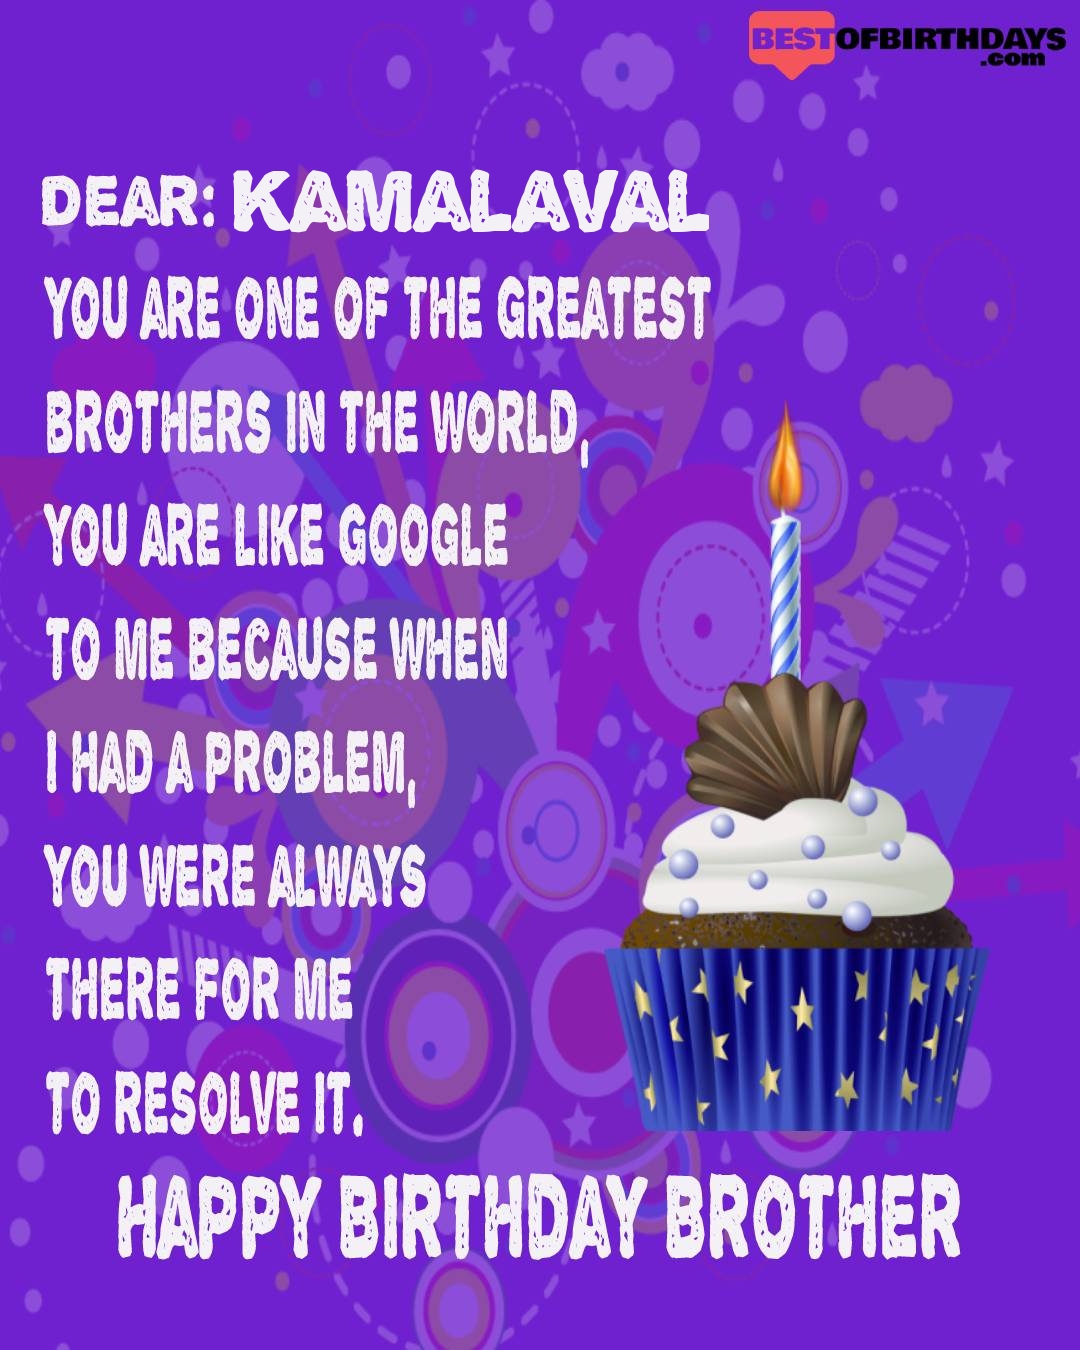 Happy birthday kamalaval bhai brother bro